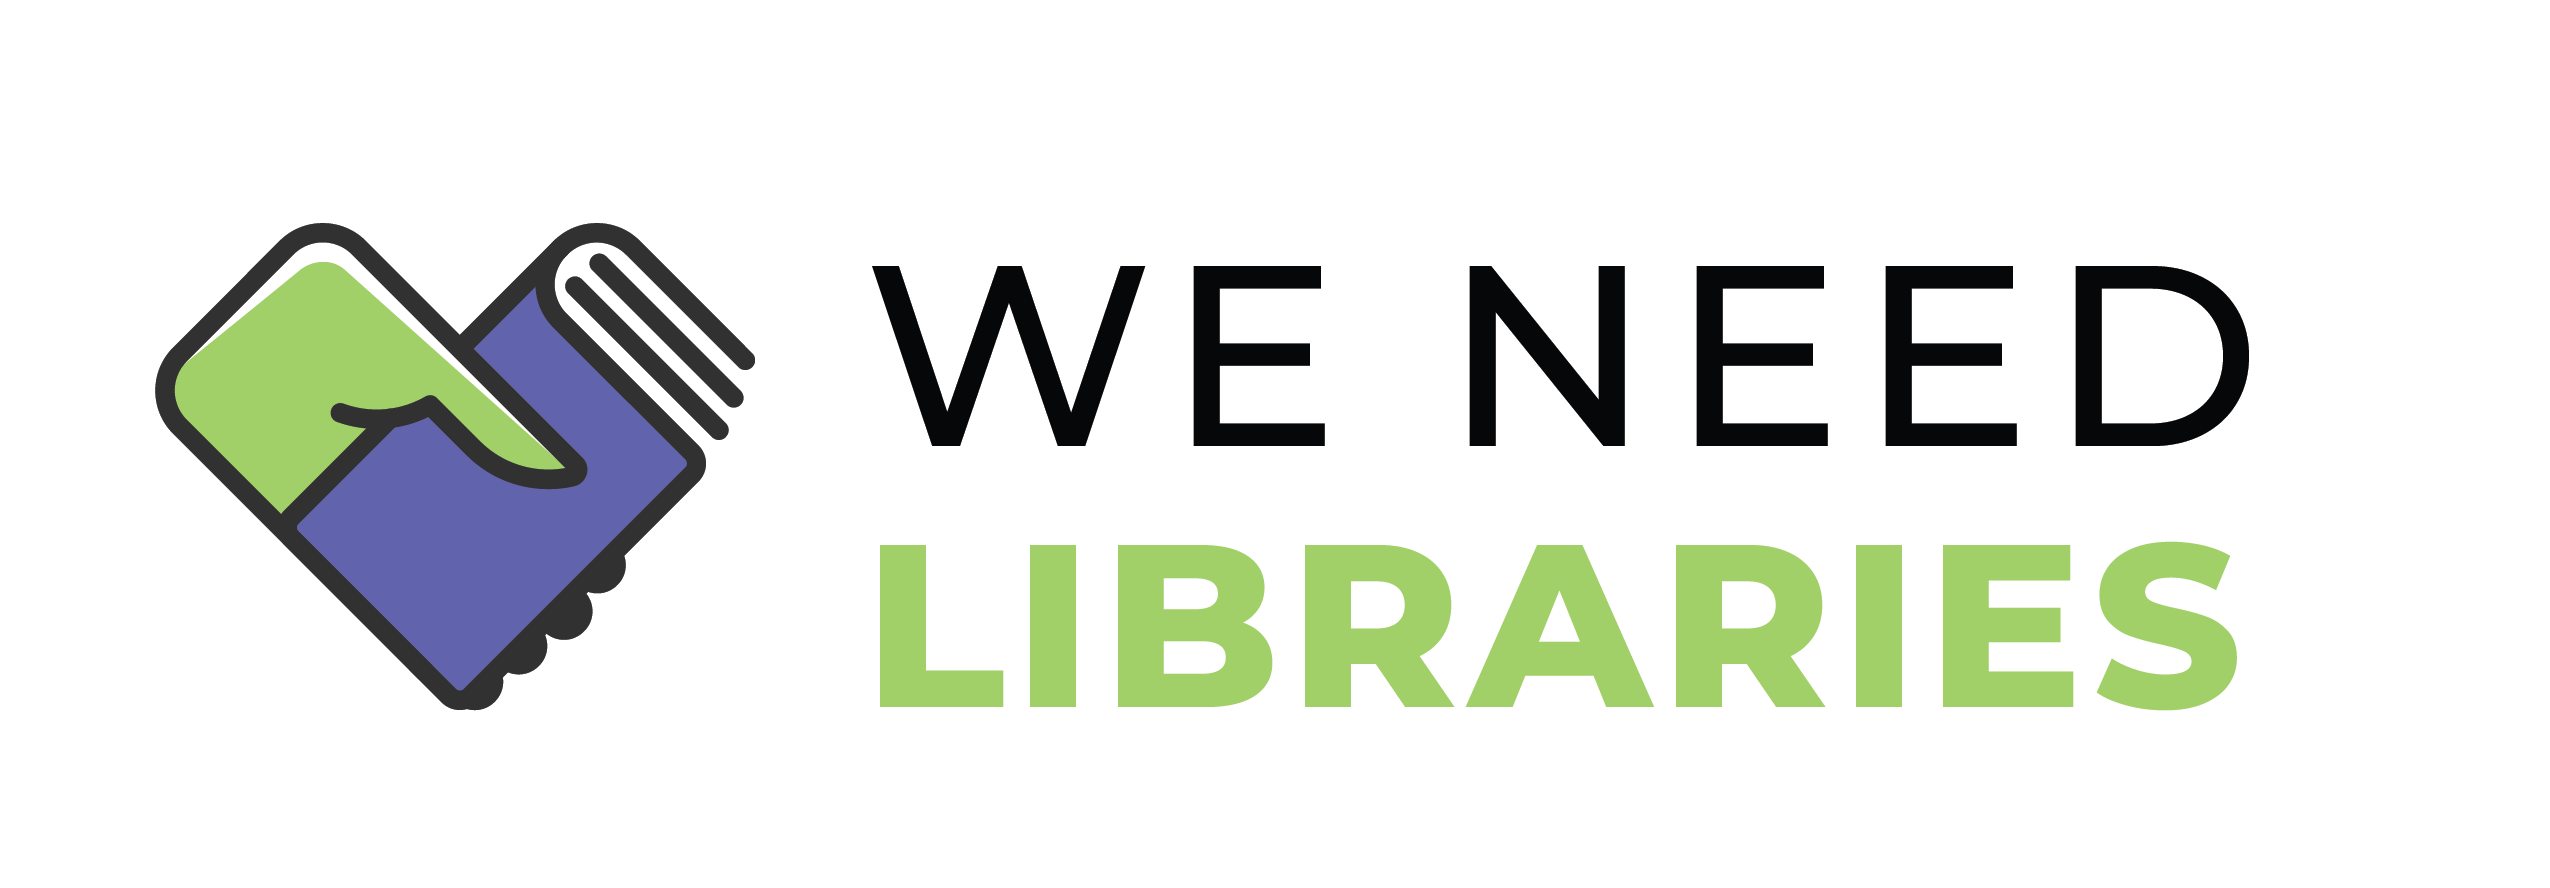 We need libraries